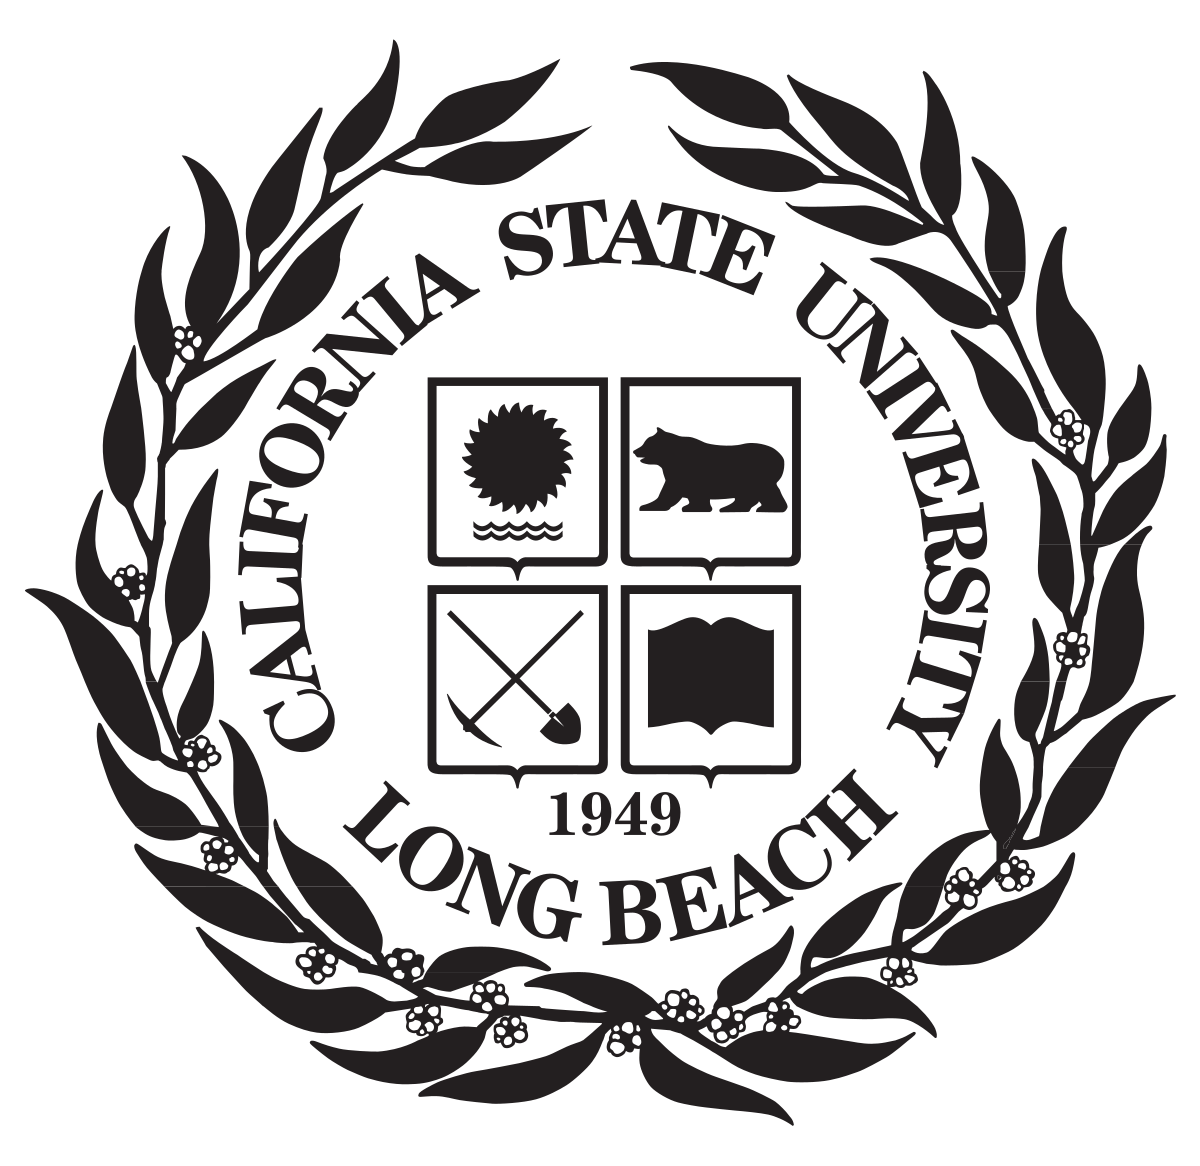 CSULB Logo